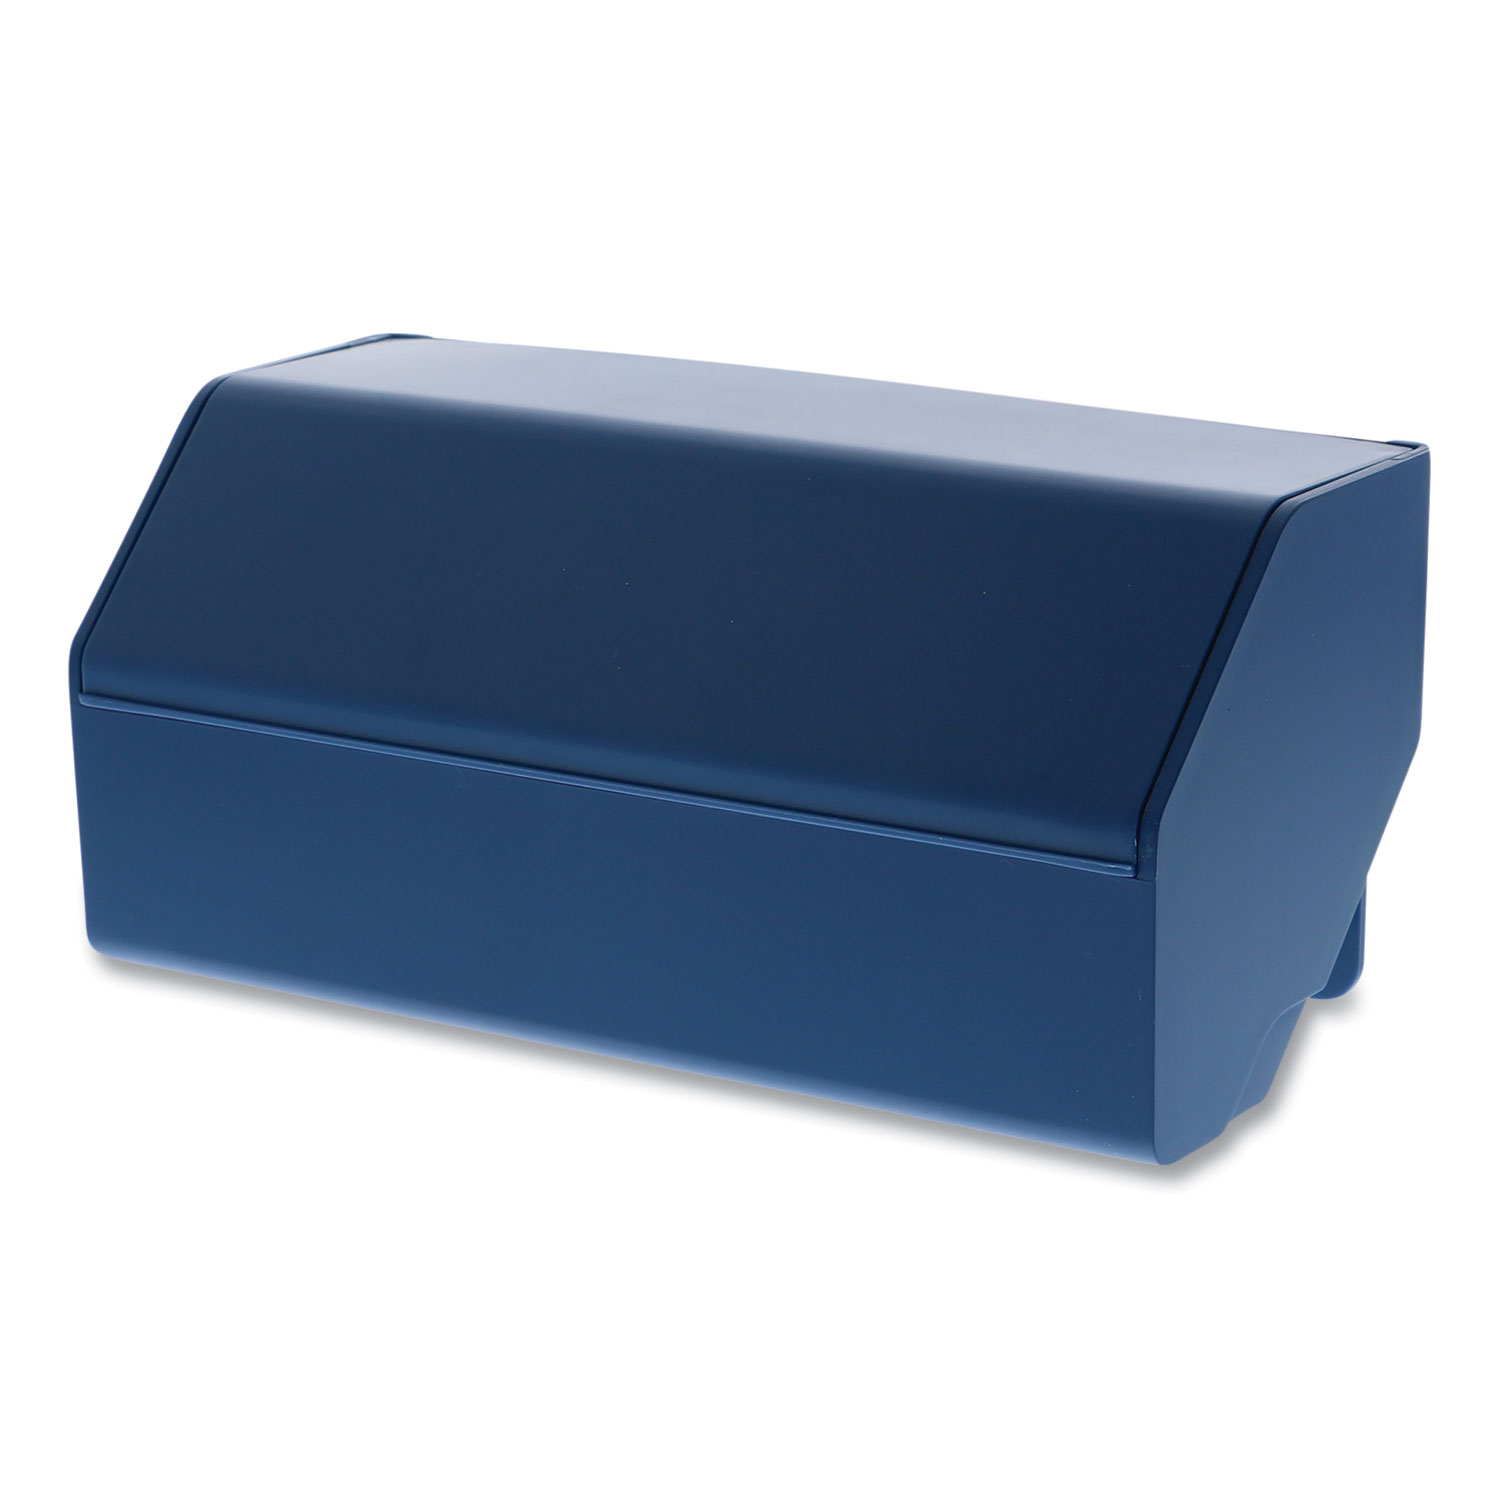  Bostitch KT-WCUP-BLUE Konnect Desktop Organizer Storage Bin, Wide, 7.5 x 3.5 x 3.5, Blue (BOS24339990) 